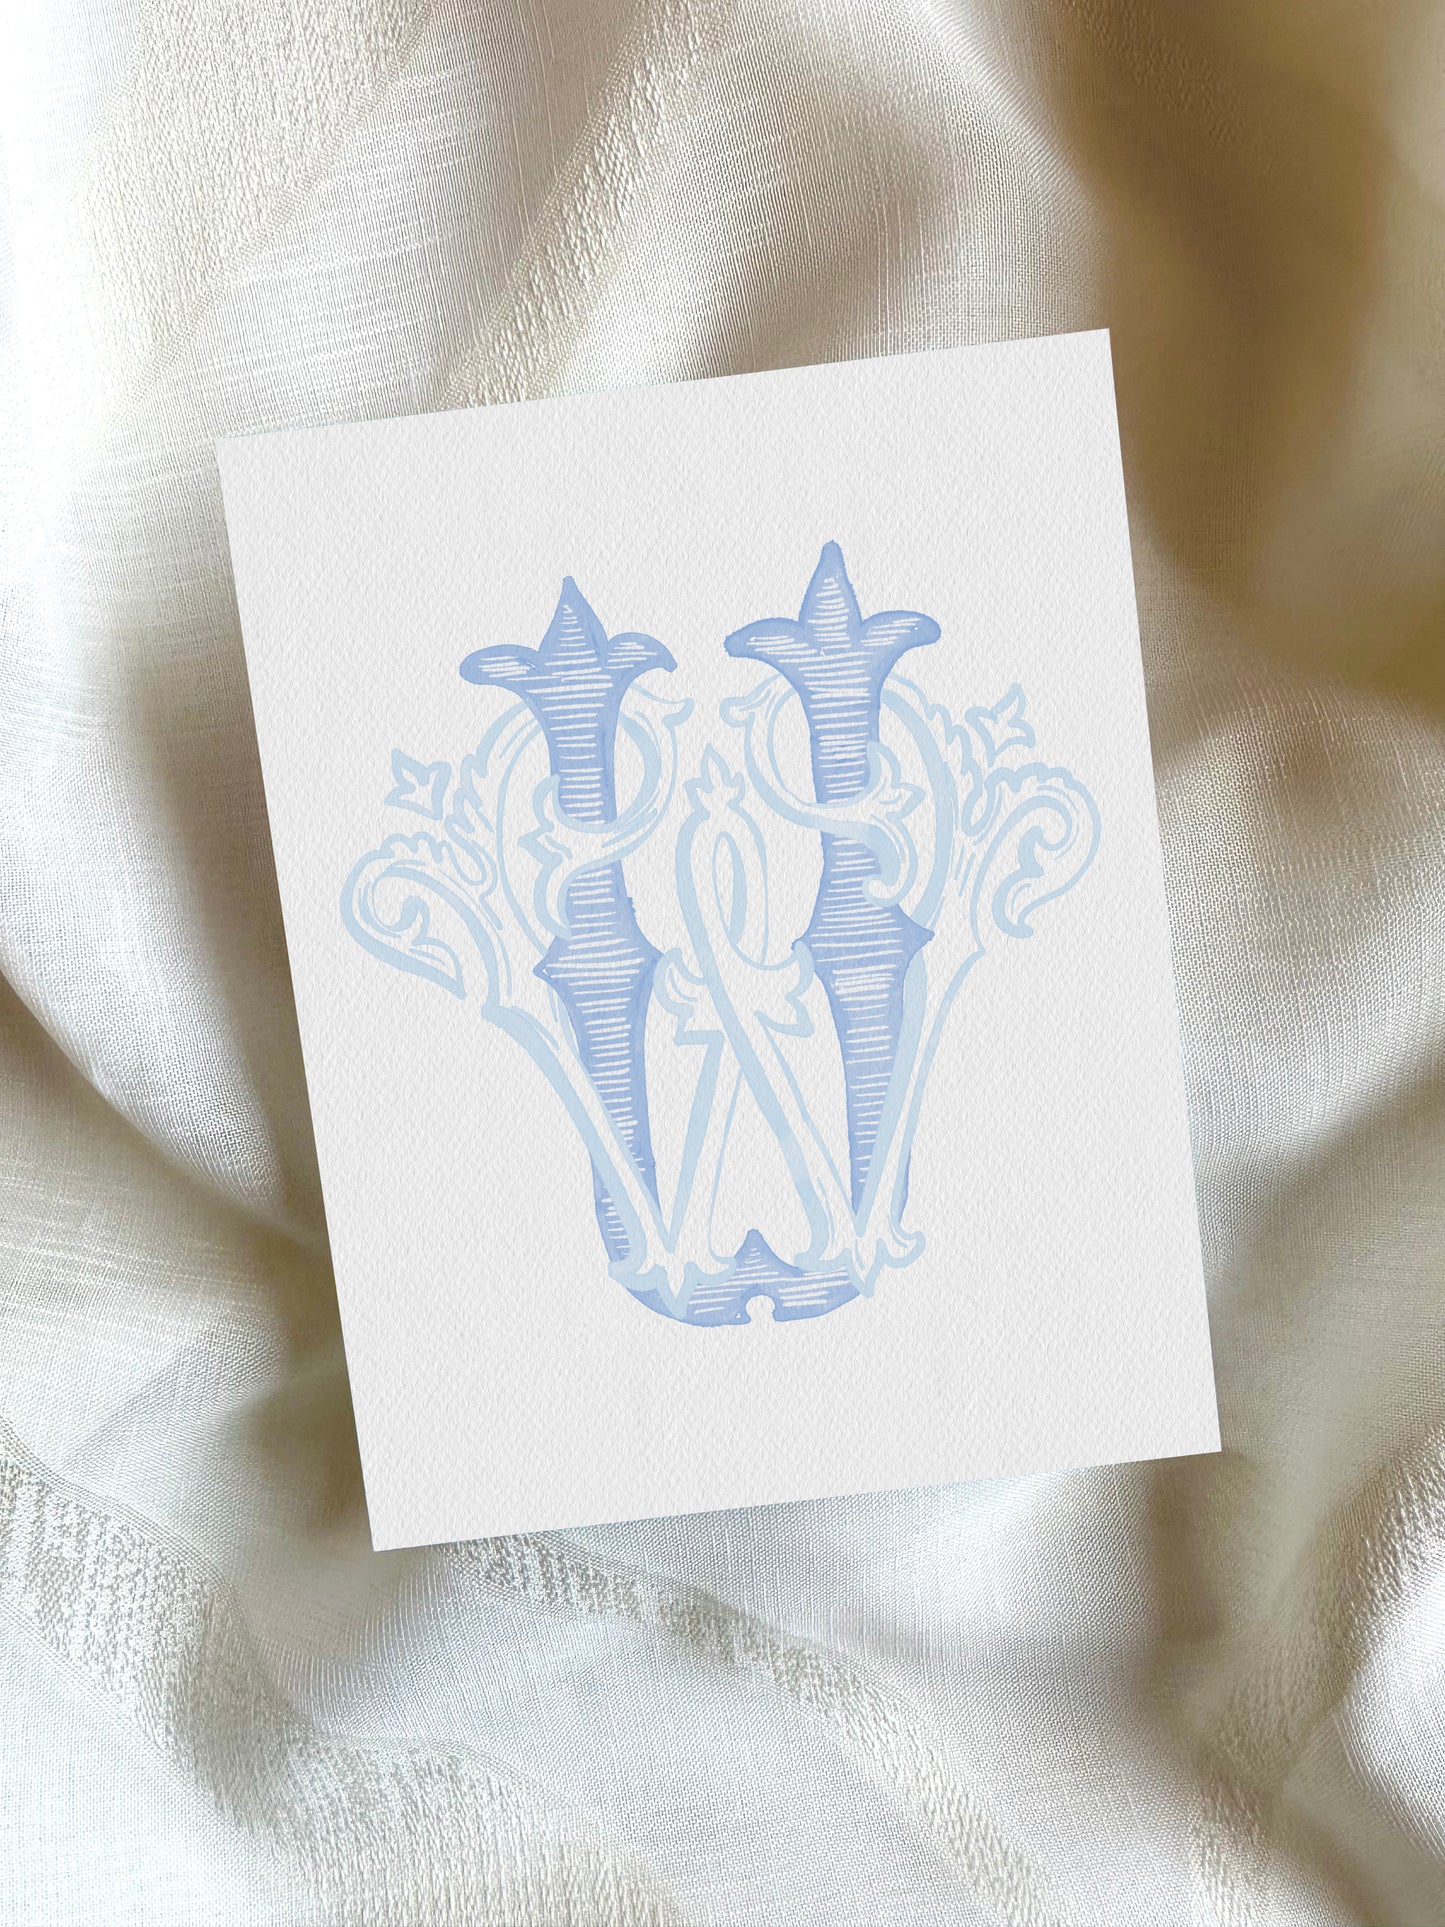 2 Letter Monogram with Letters WU UW | Digital Download - Wedding Monogram SVG, Personal Logo, Wedding Logo for Wedding Invitations The Wedding Crest Lab